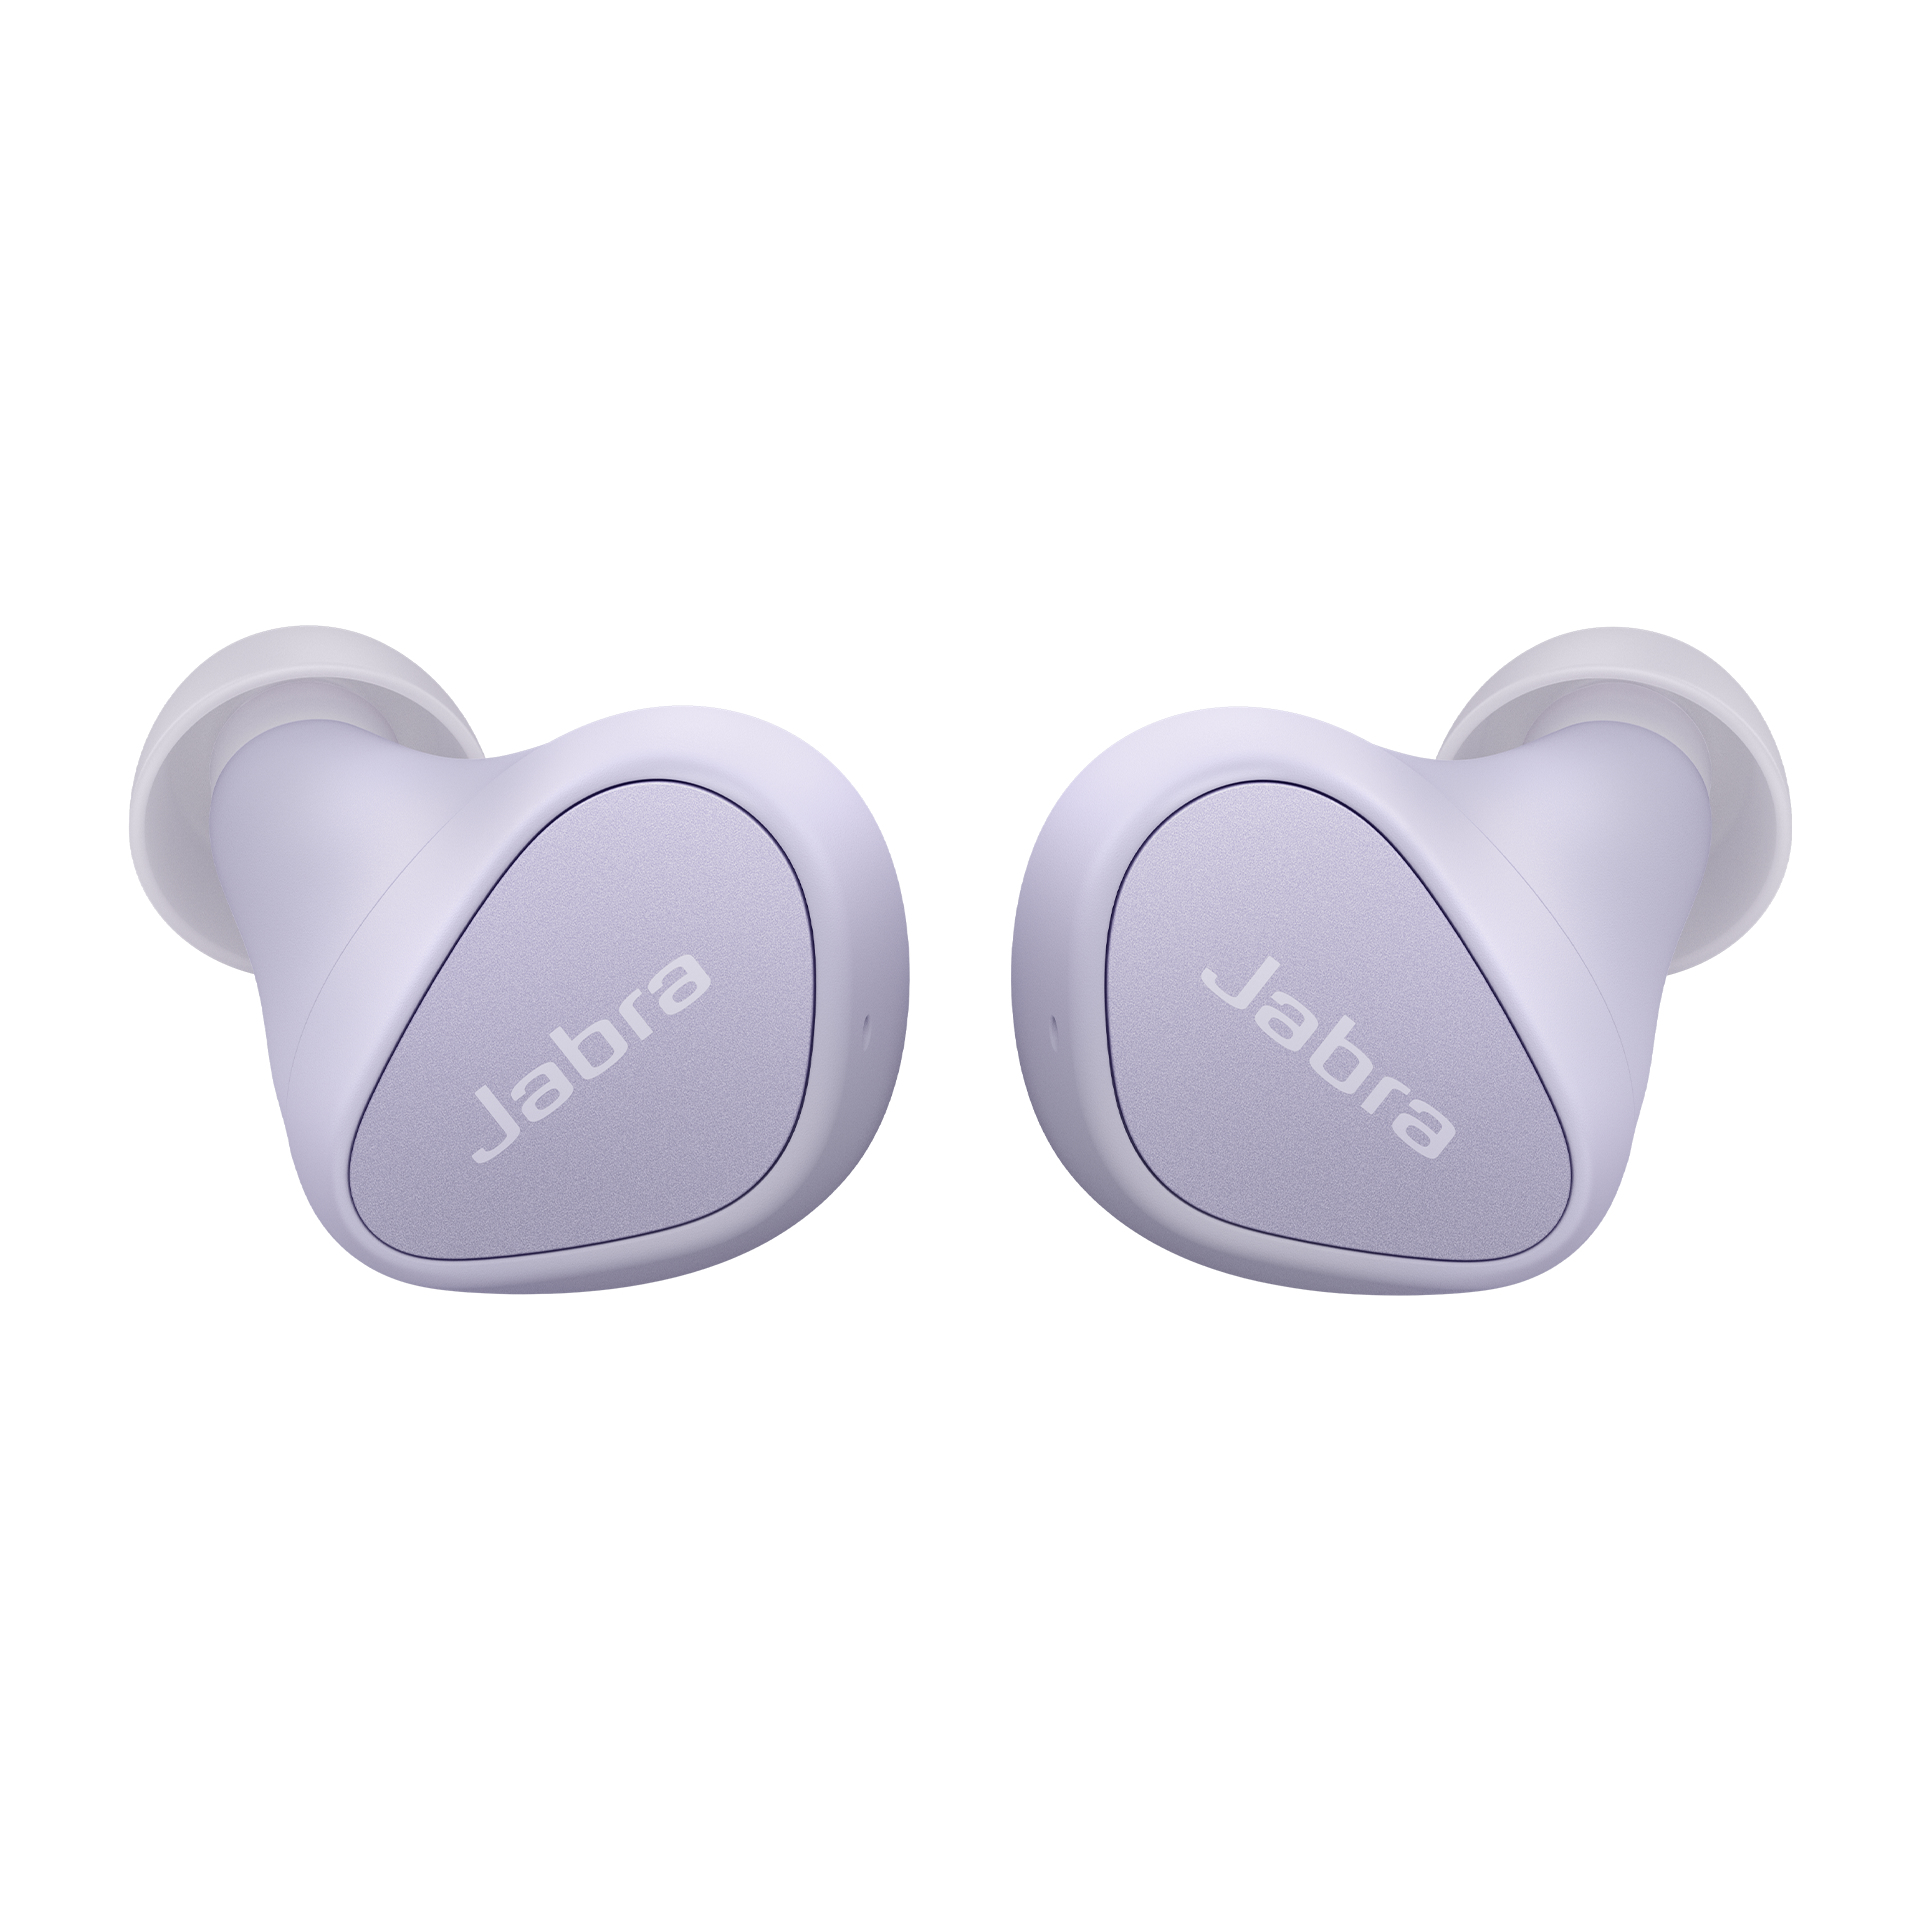 Jabra Elite 3 Lilac True Wireless Earbuds